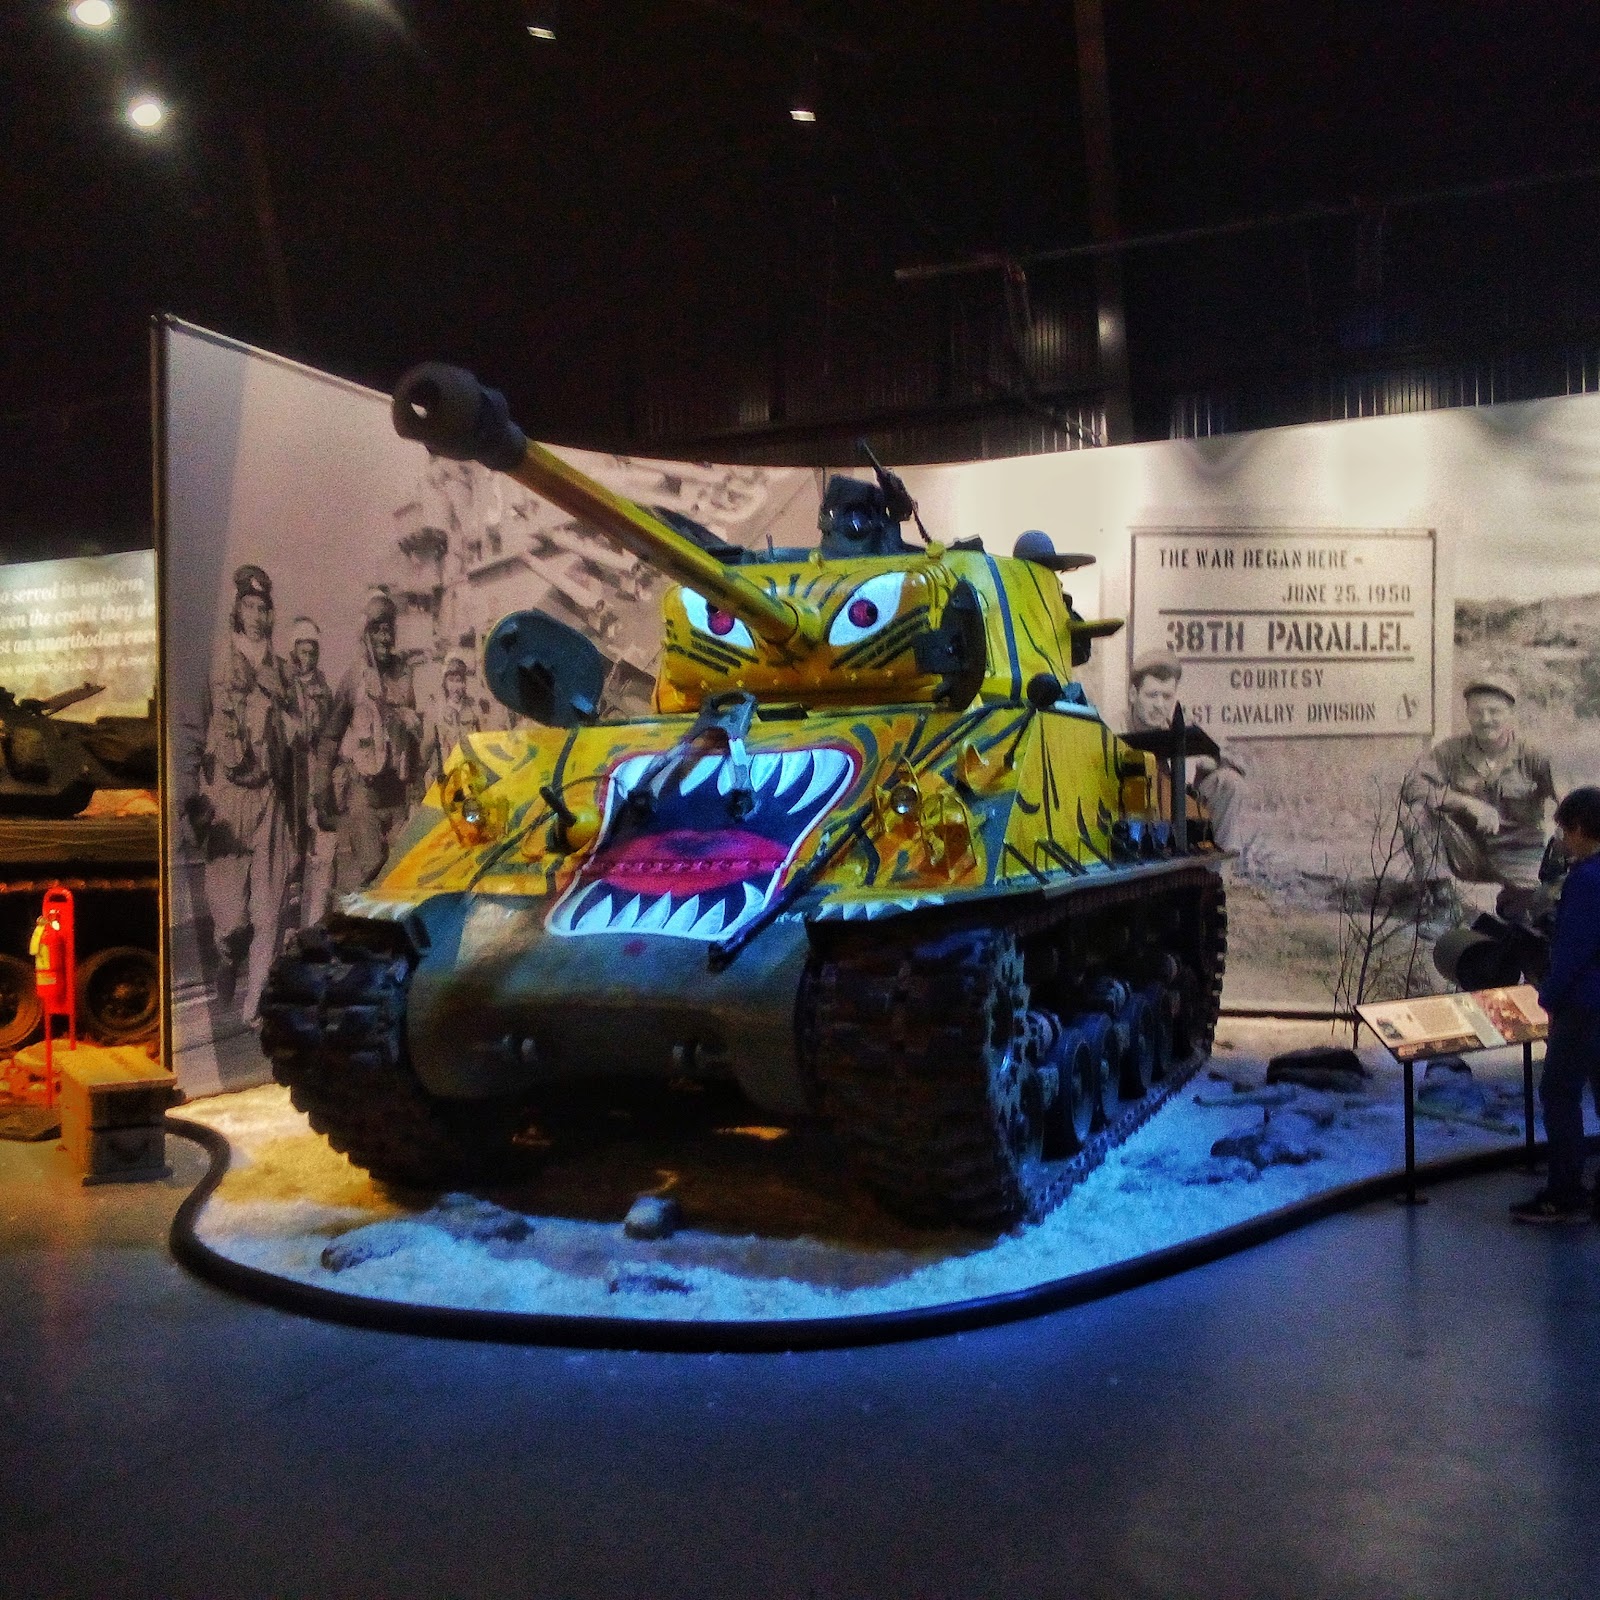 Decorated Tank from Vietnam War